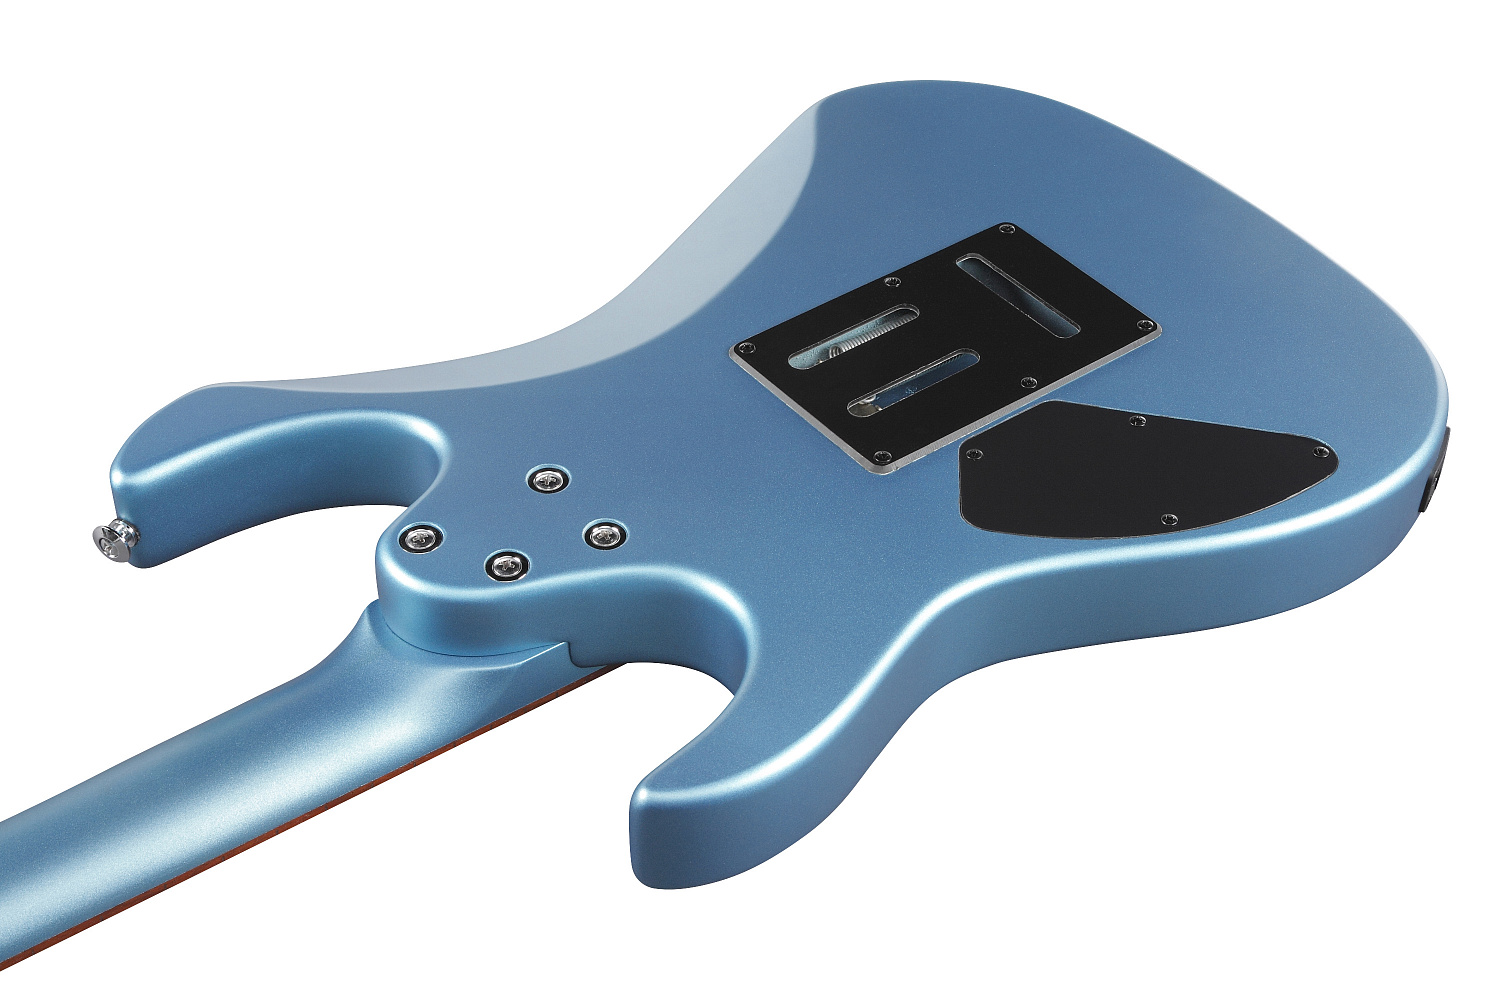 Ibanez GRX120SP-MLM электрогитара, цвет голубой металлик